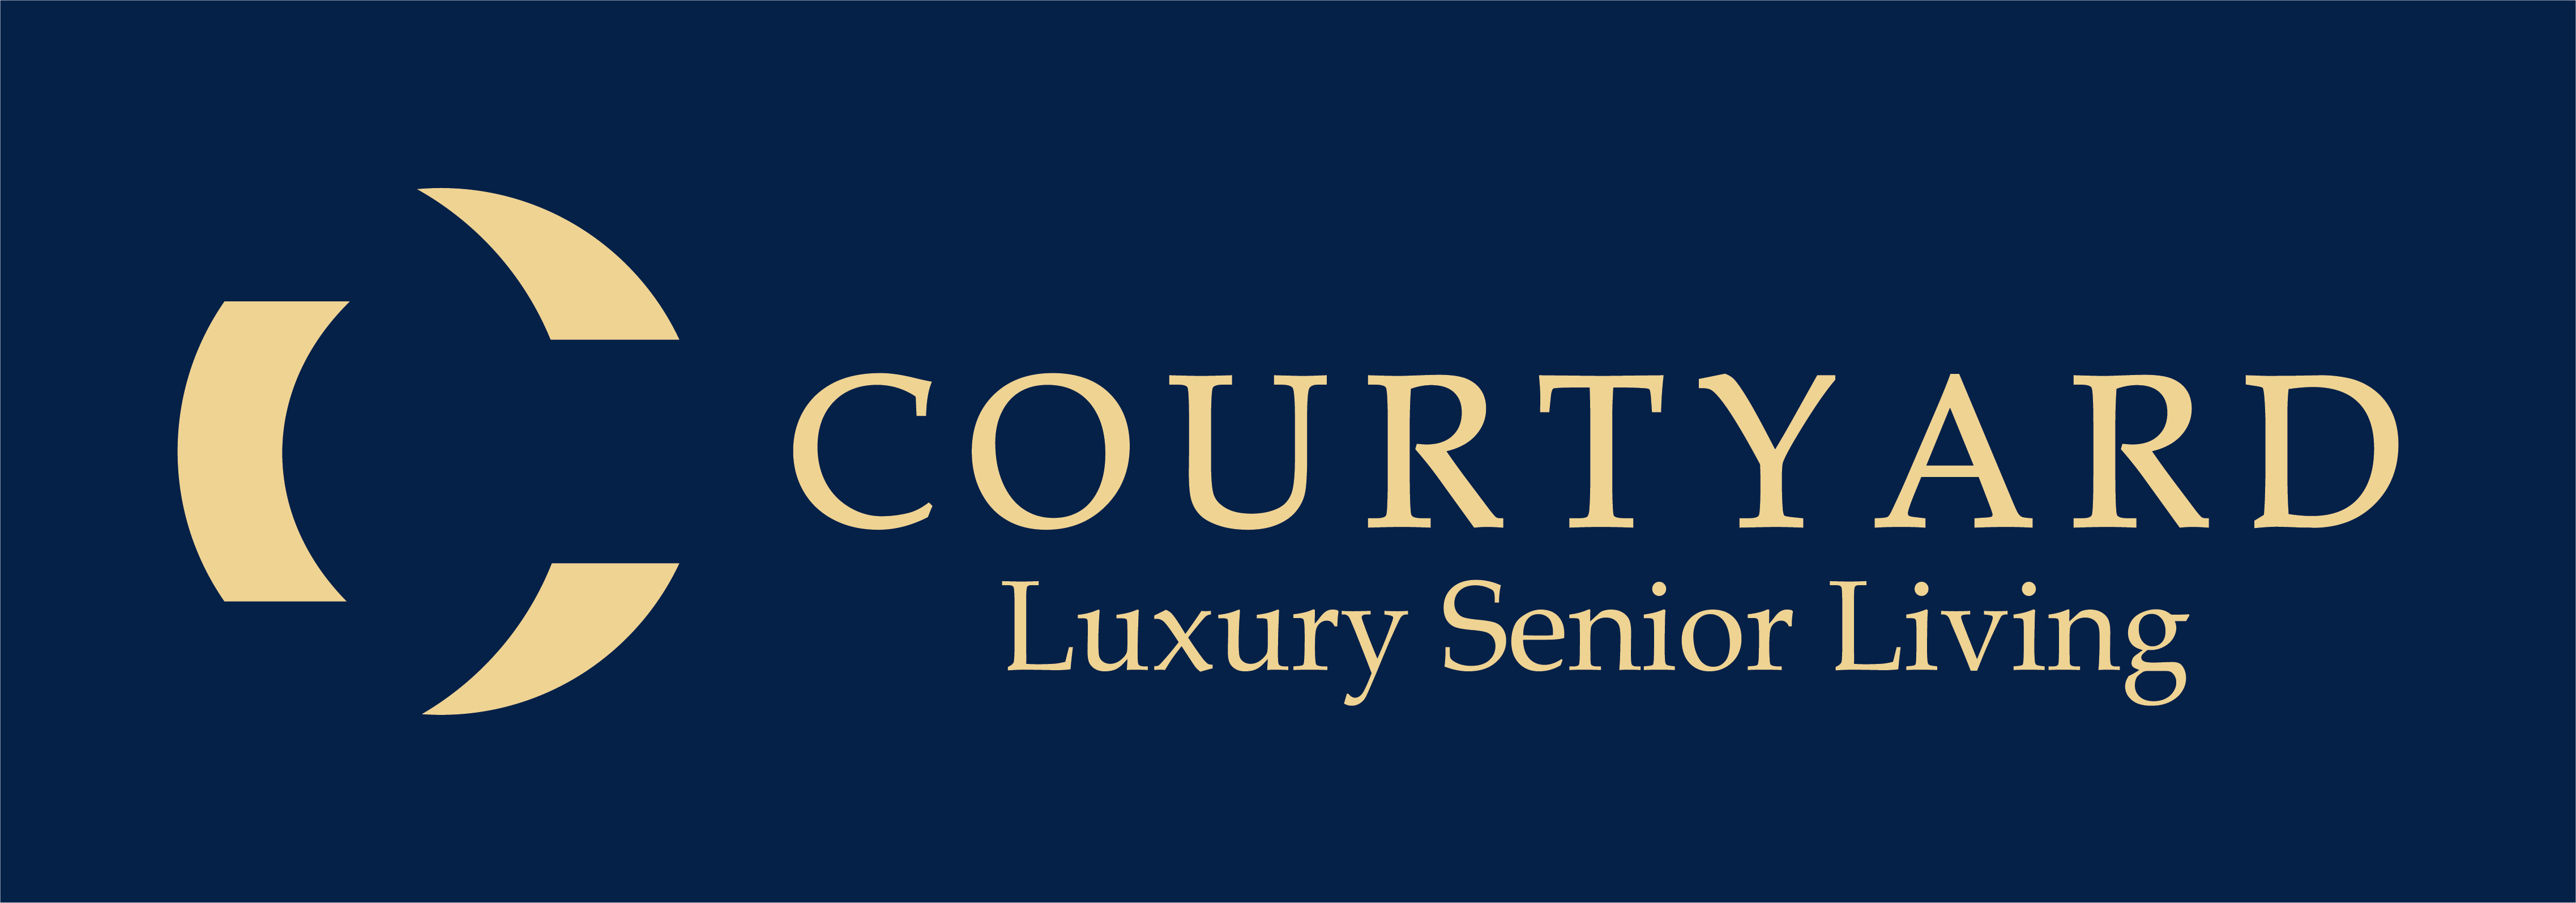 COURTYARD Senior Living logo 1